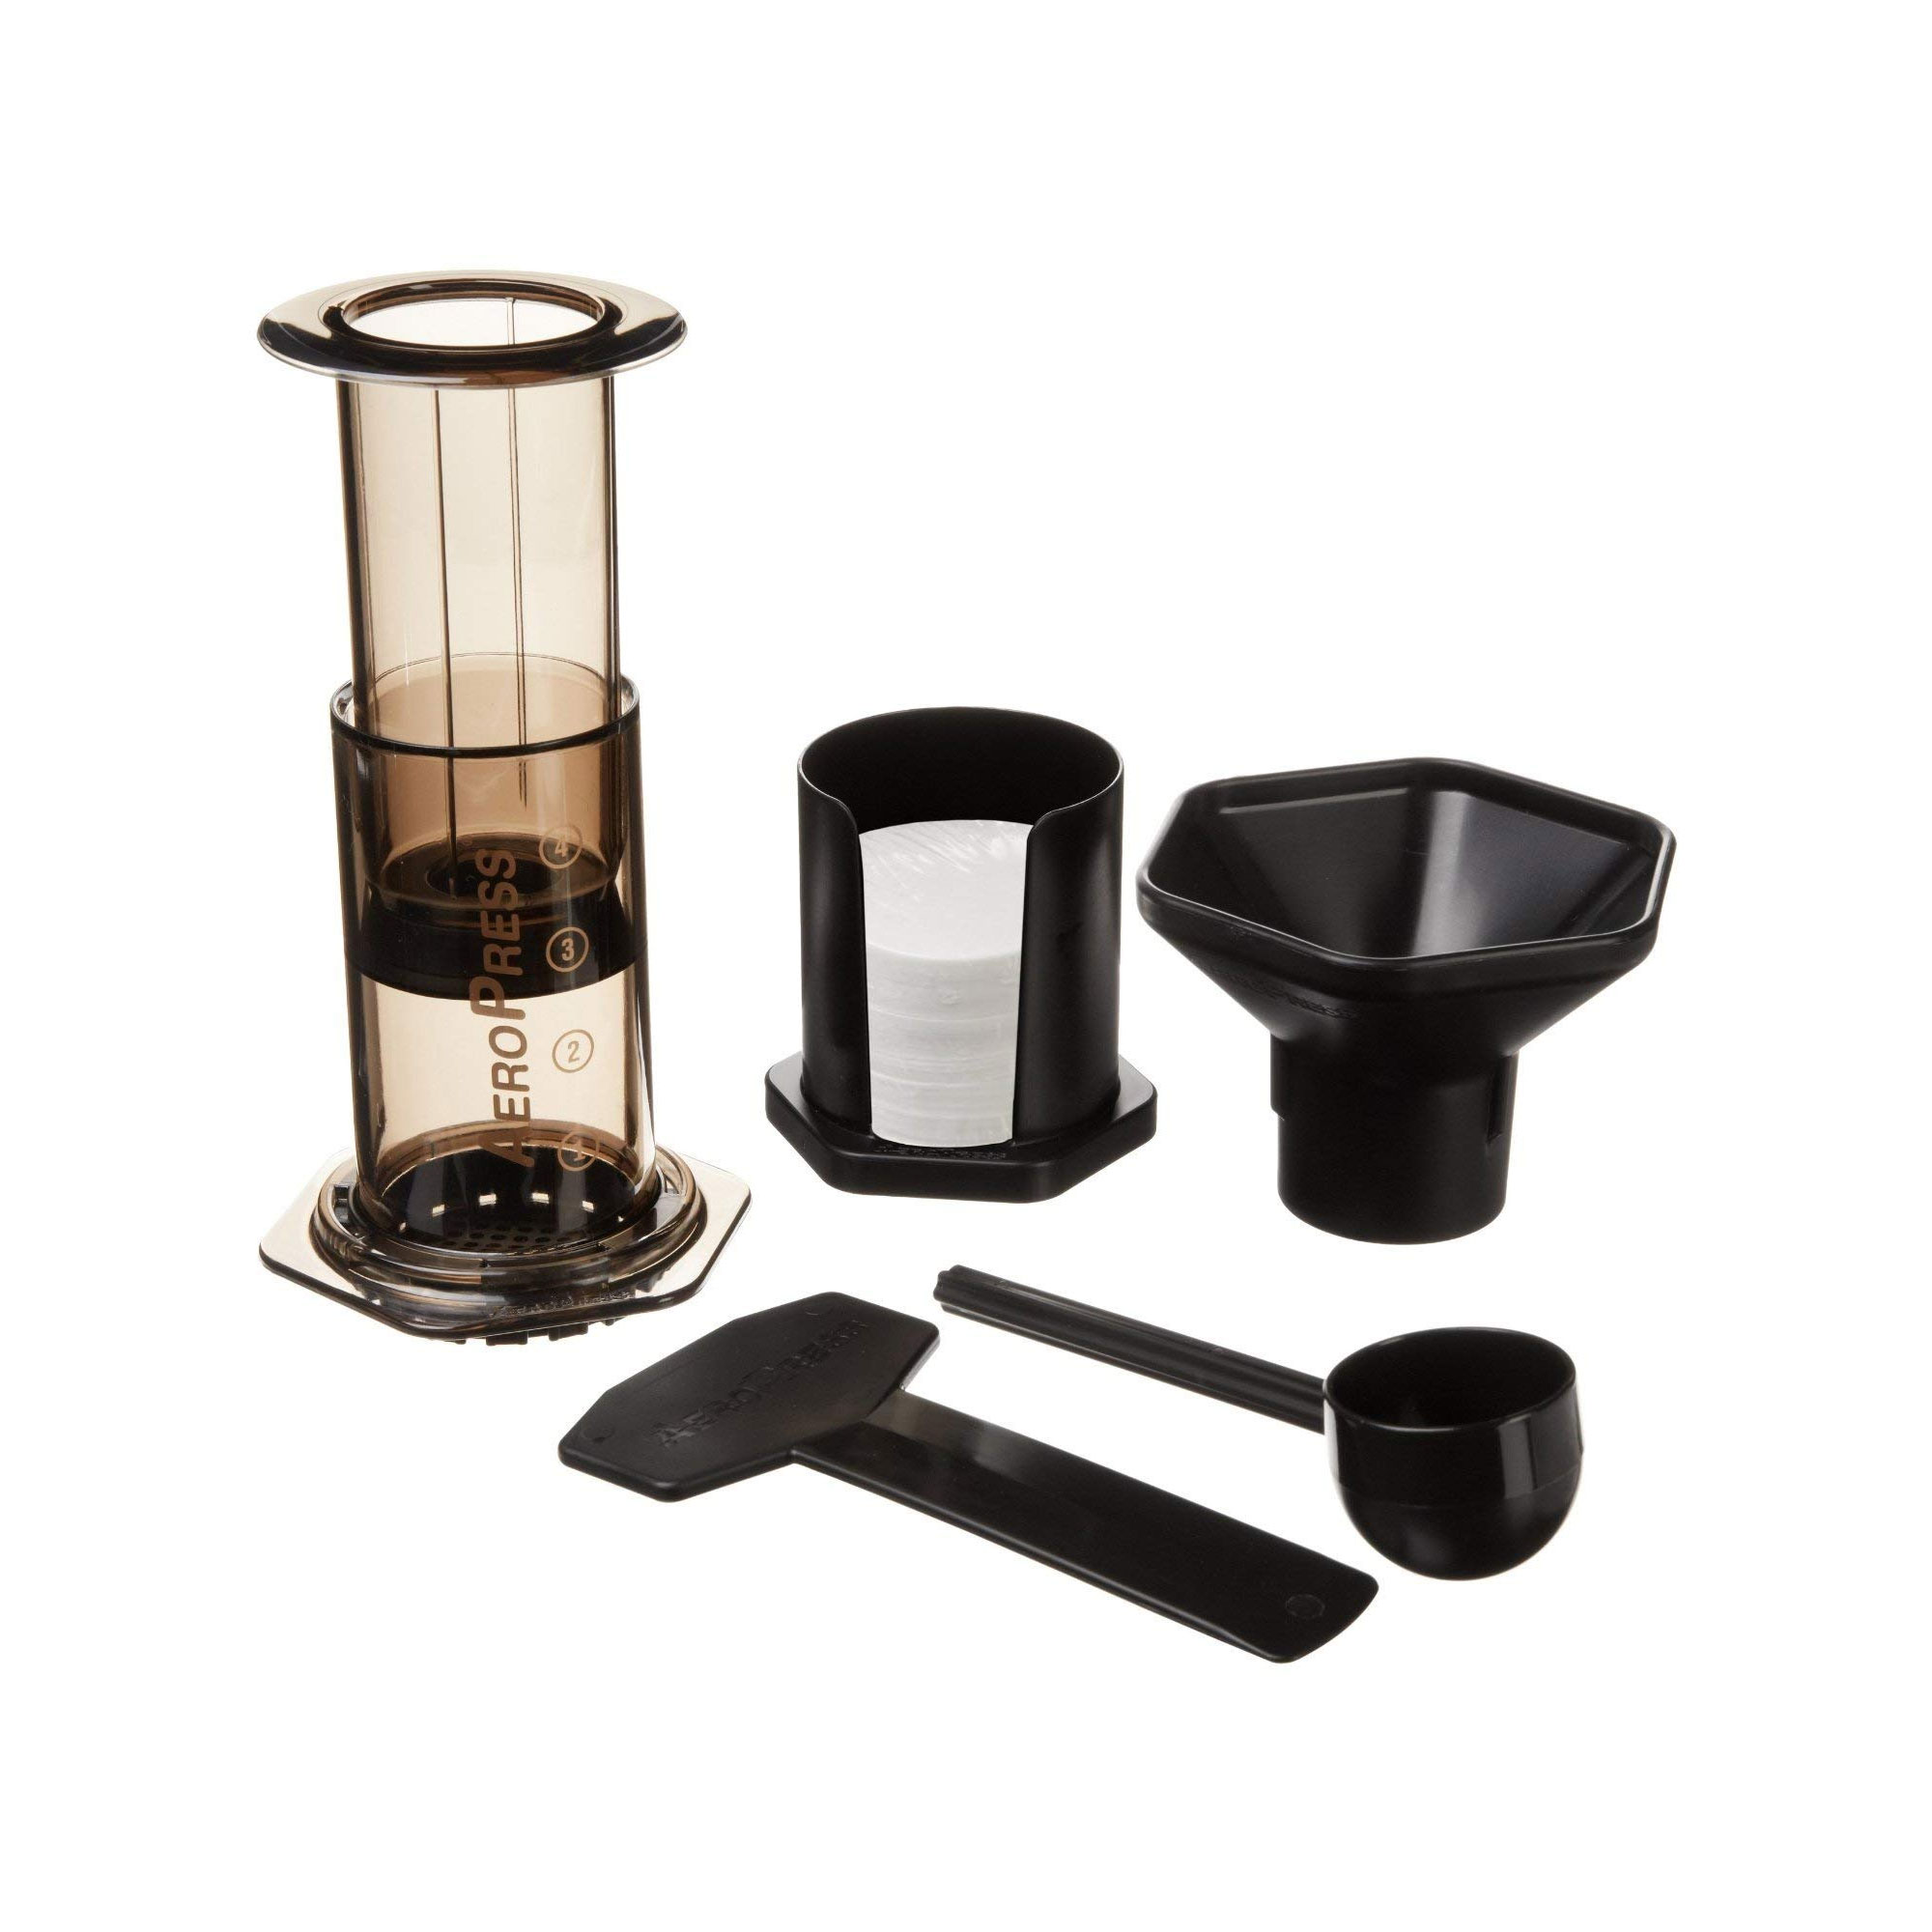 AeroPress 83R20 3 Cup Espresso Style Lightweight Handy Coffee Maker Set, Black - image 1 of 4